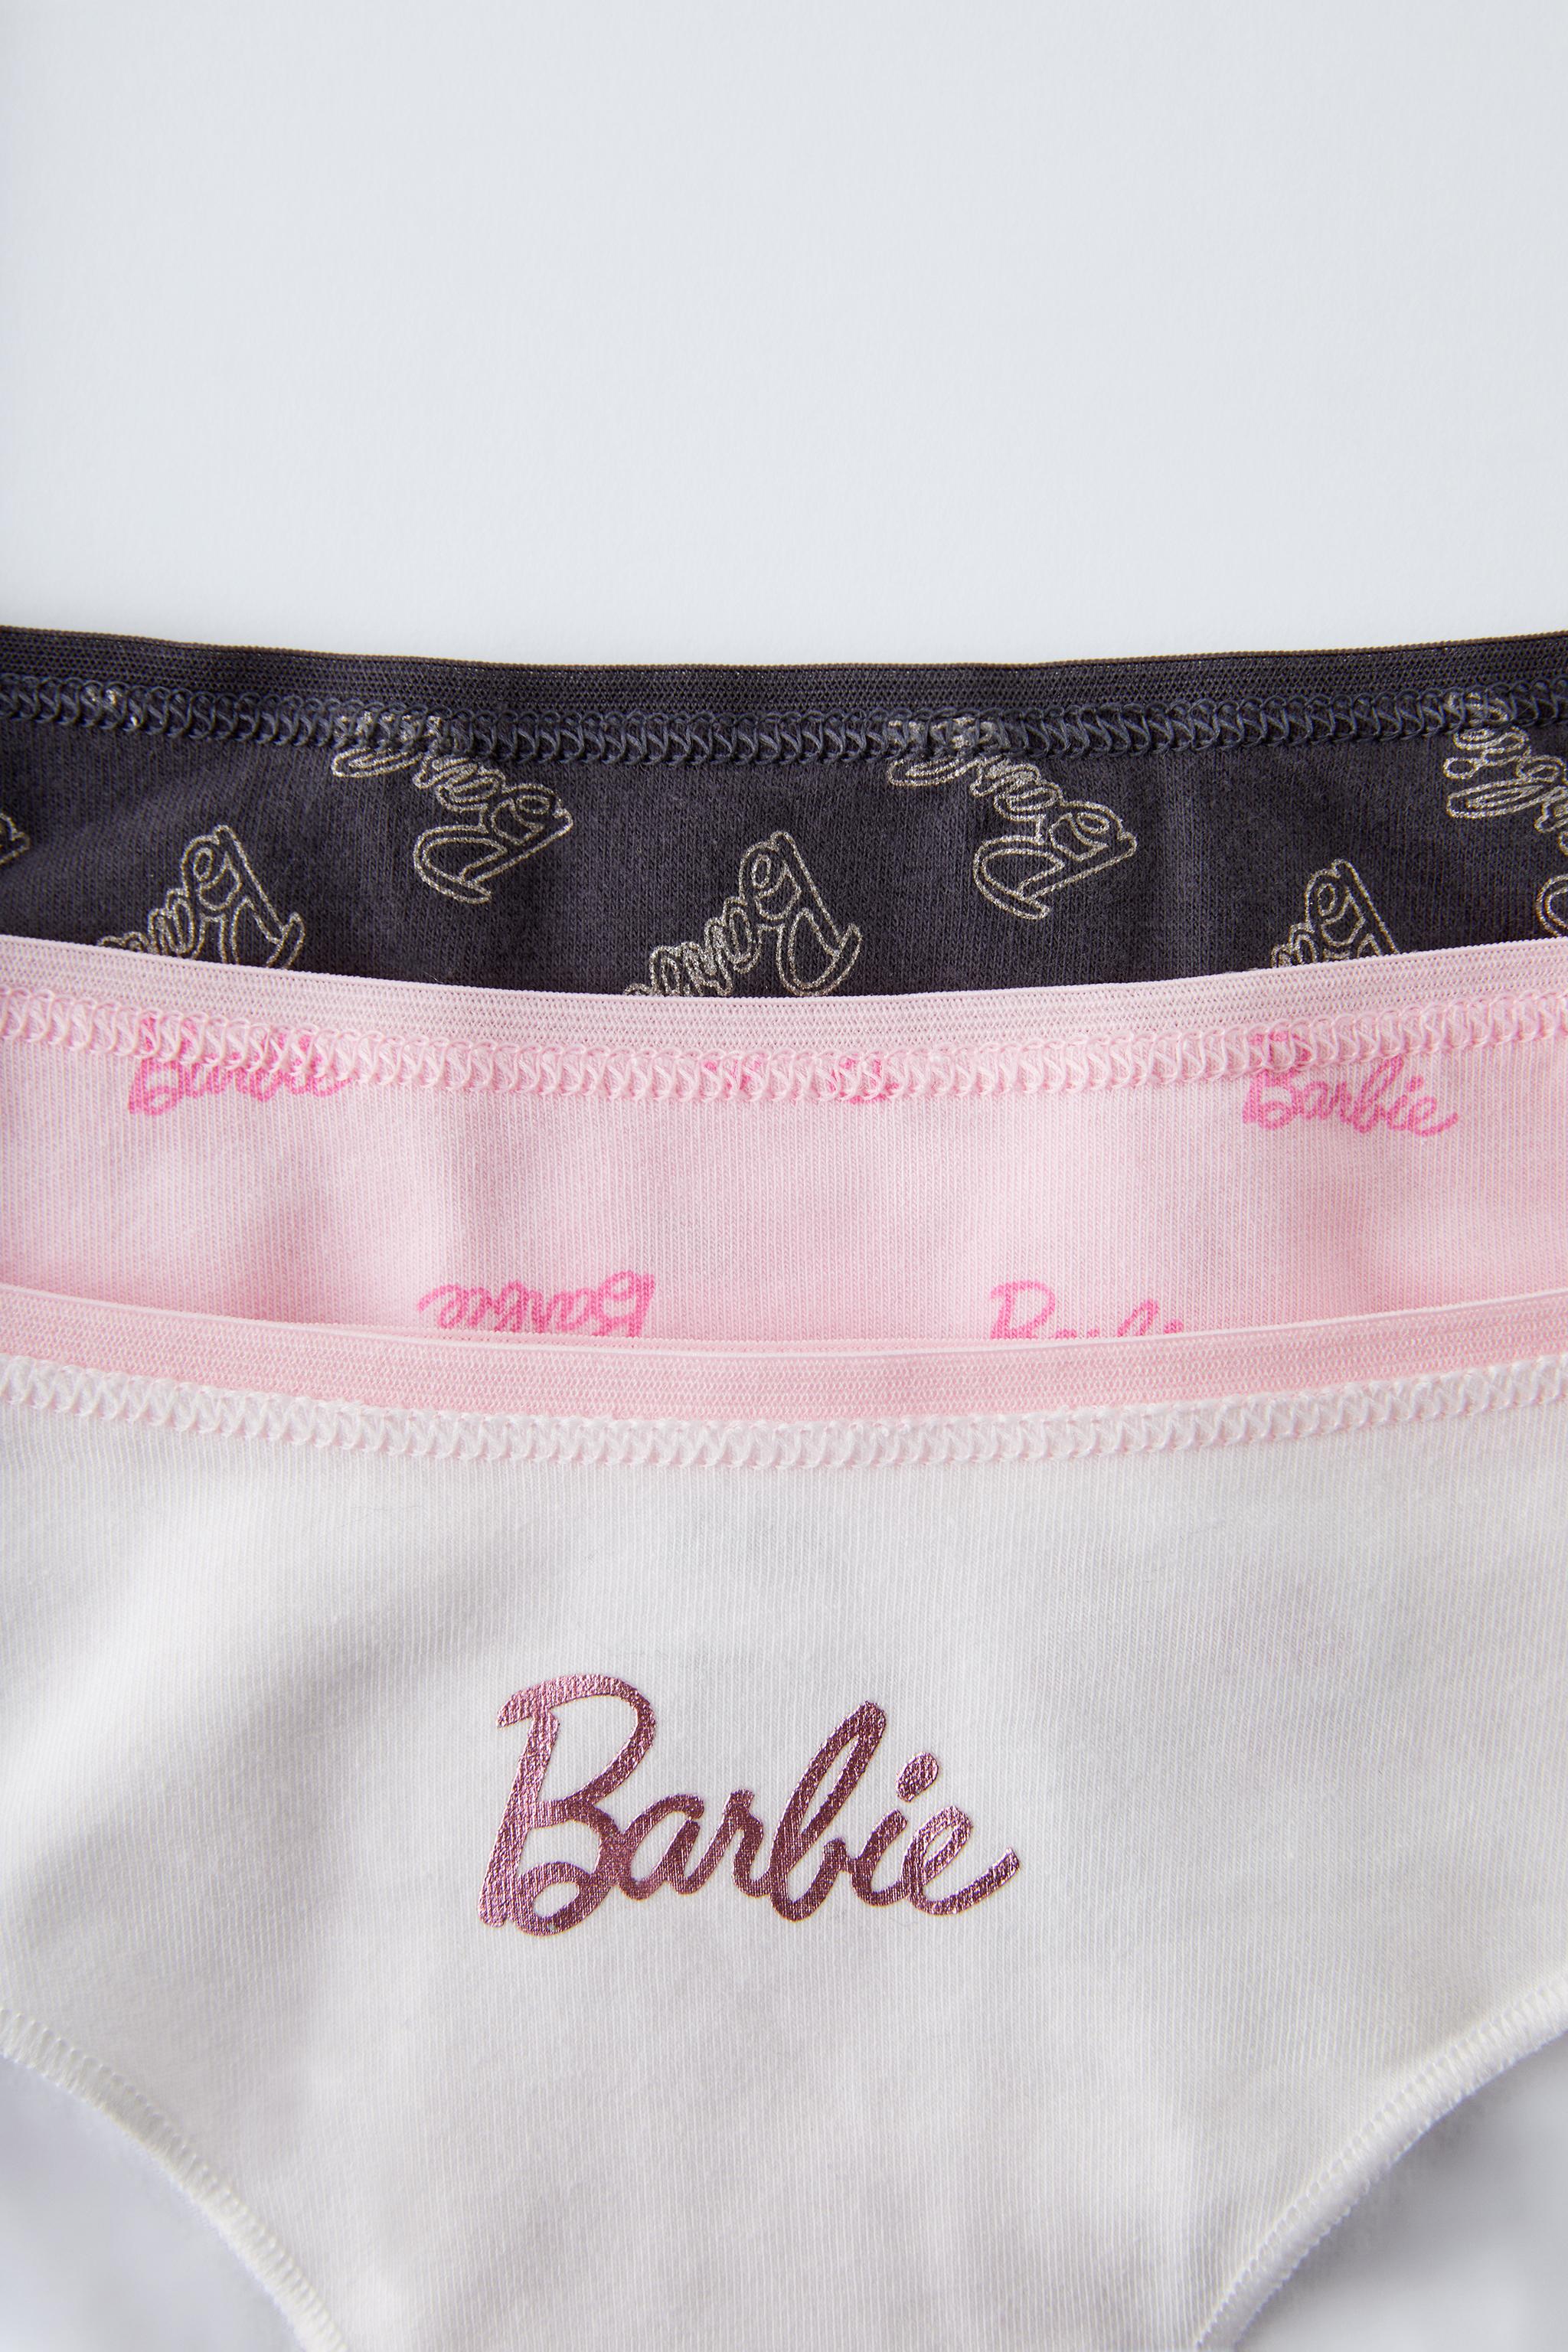 Barbie Girls Briefs 4 Pack - Pink & Purple - American Brand 